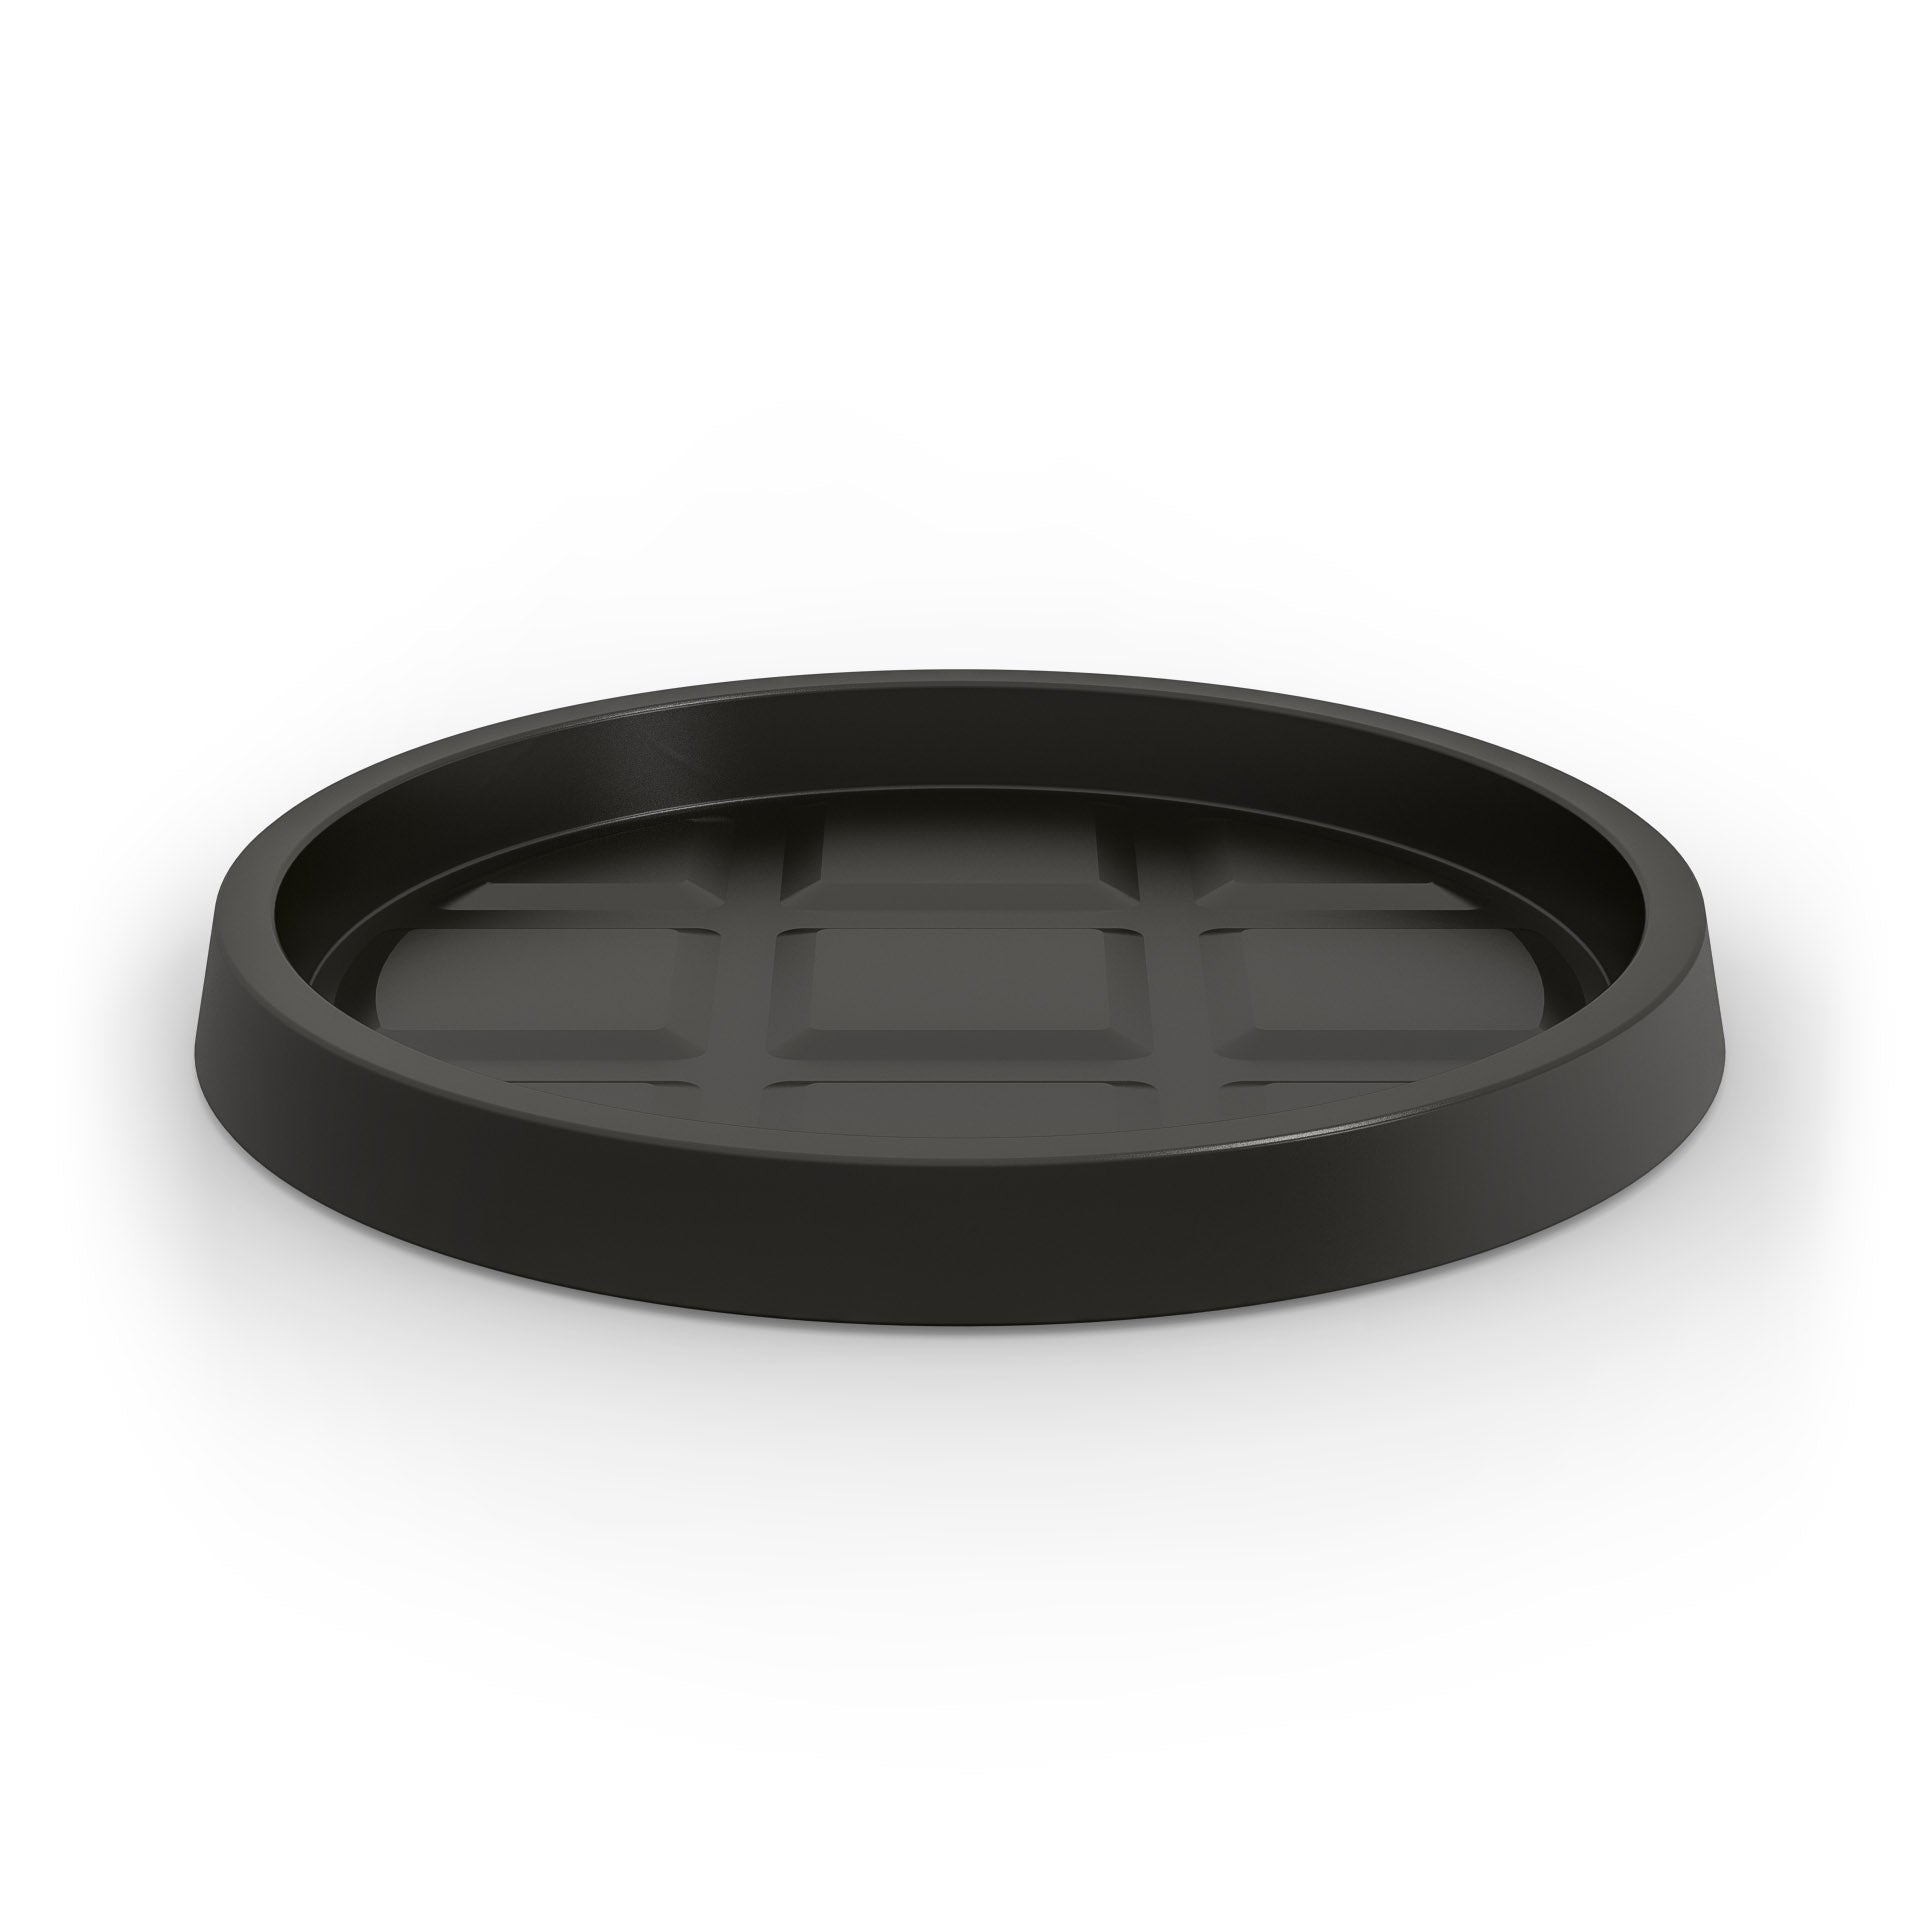 A black saucer for Modscene planters pots. NZ made.